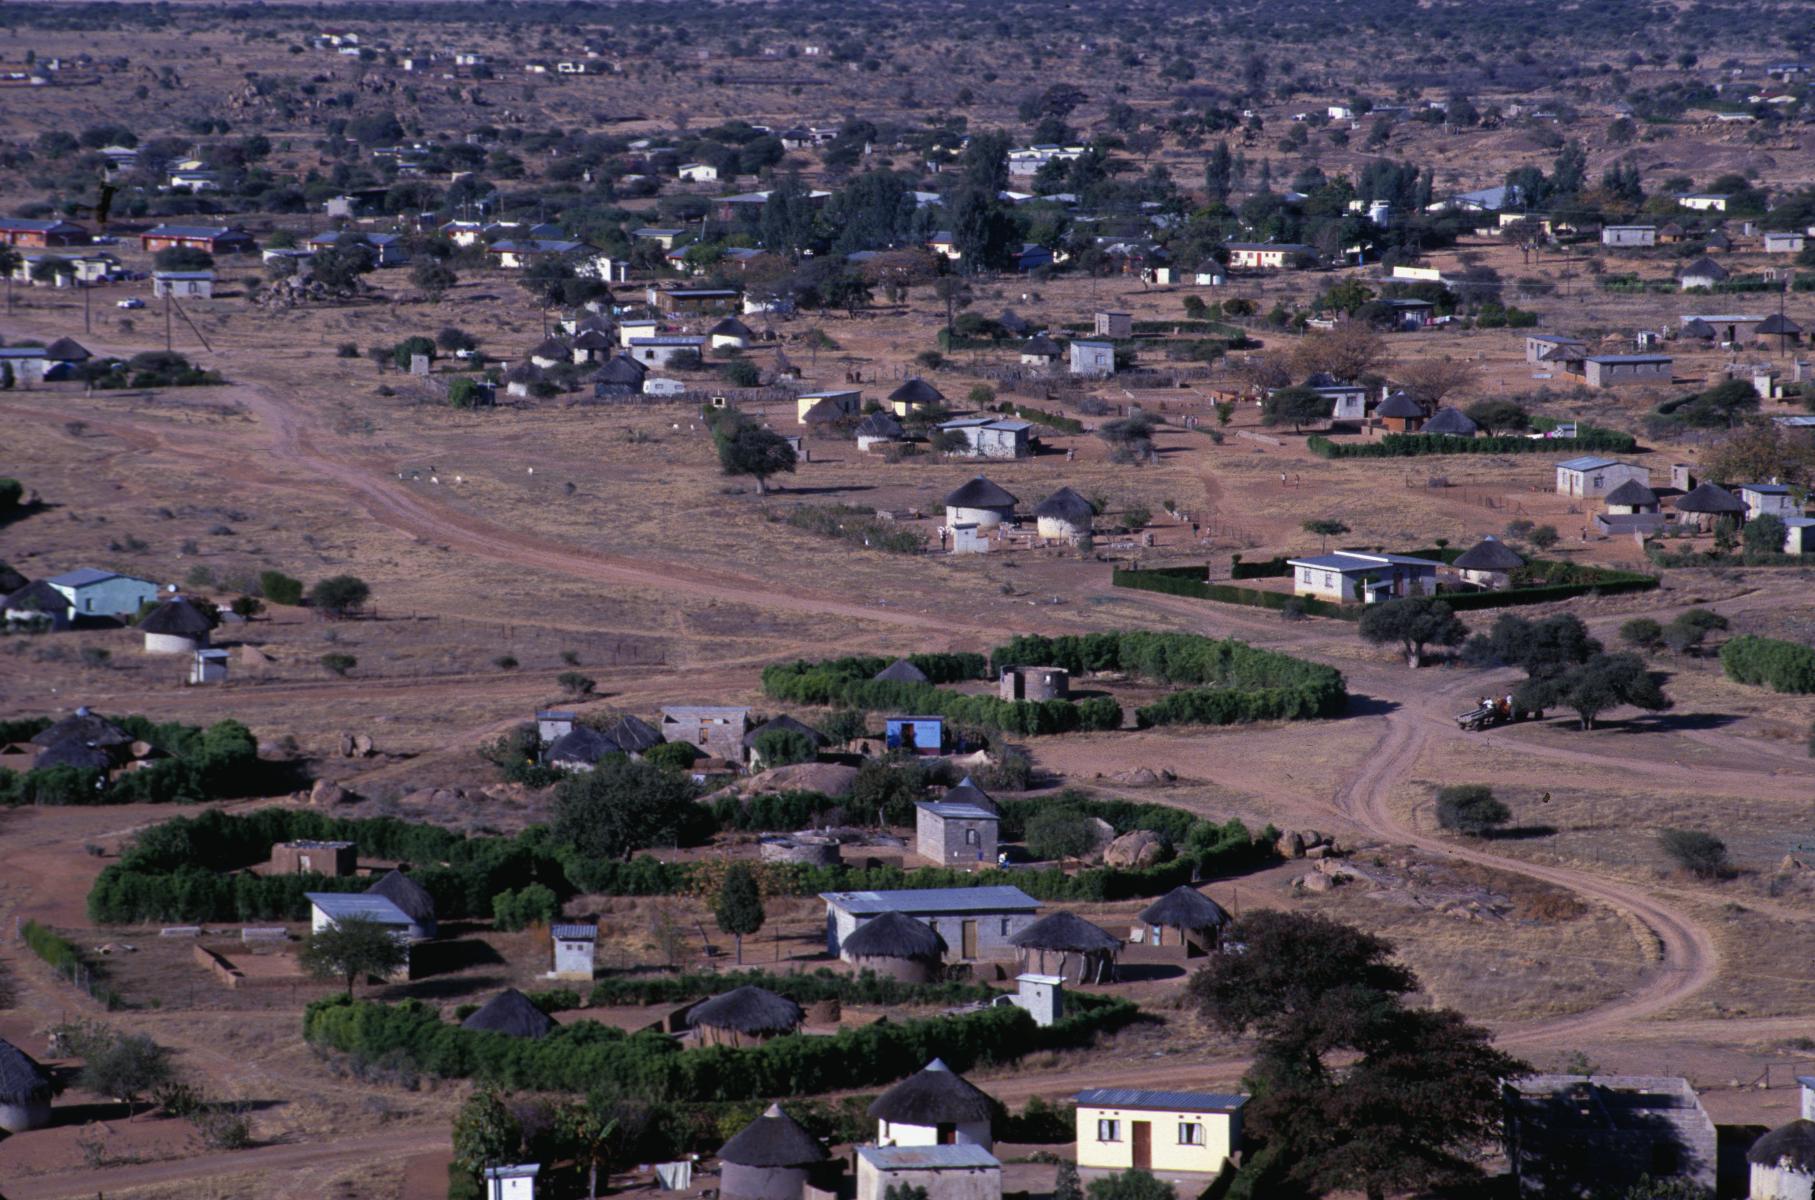 Thamaga school in 1997